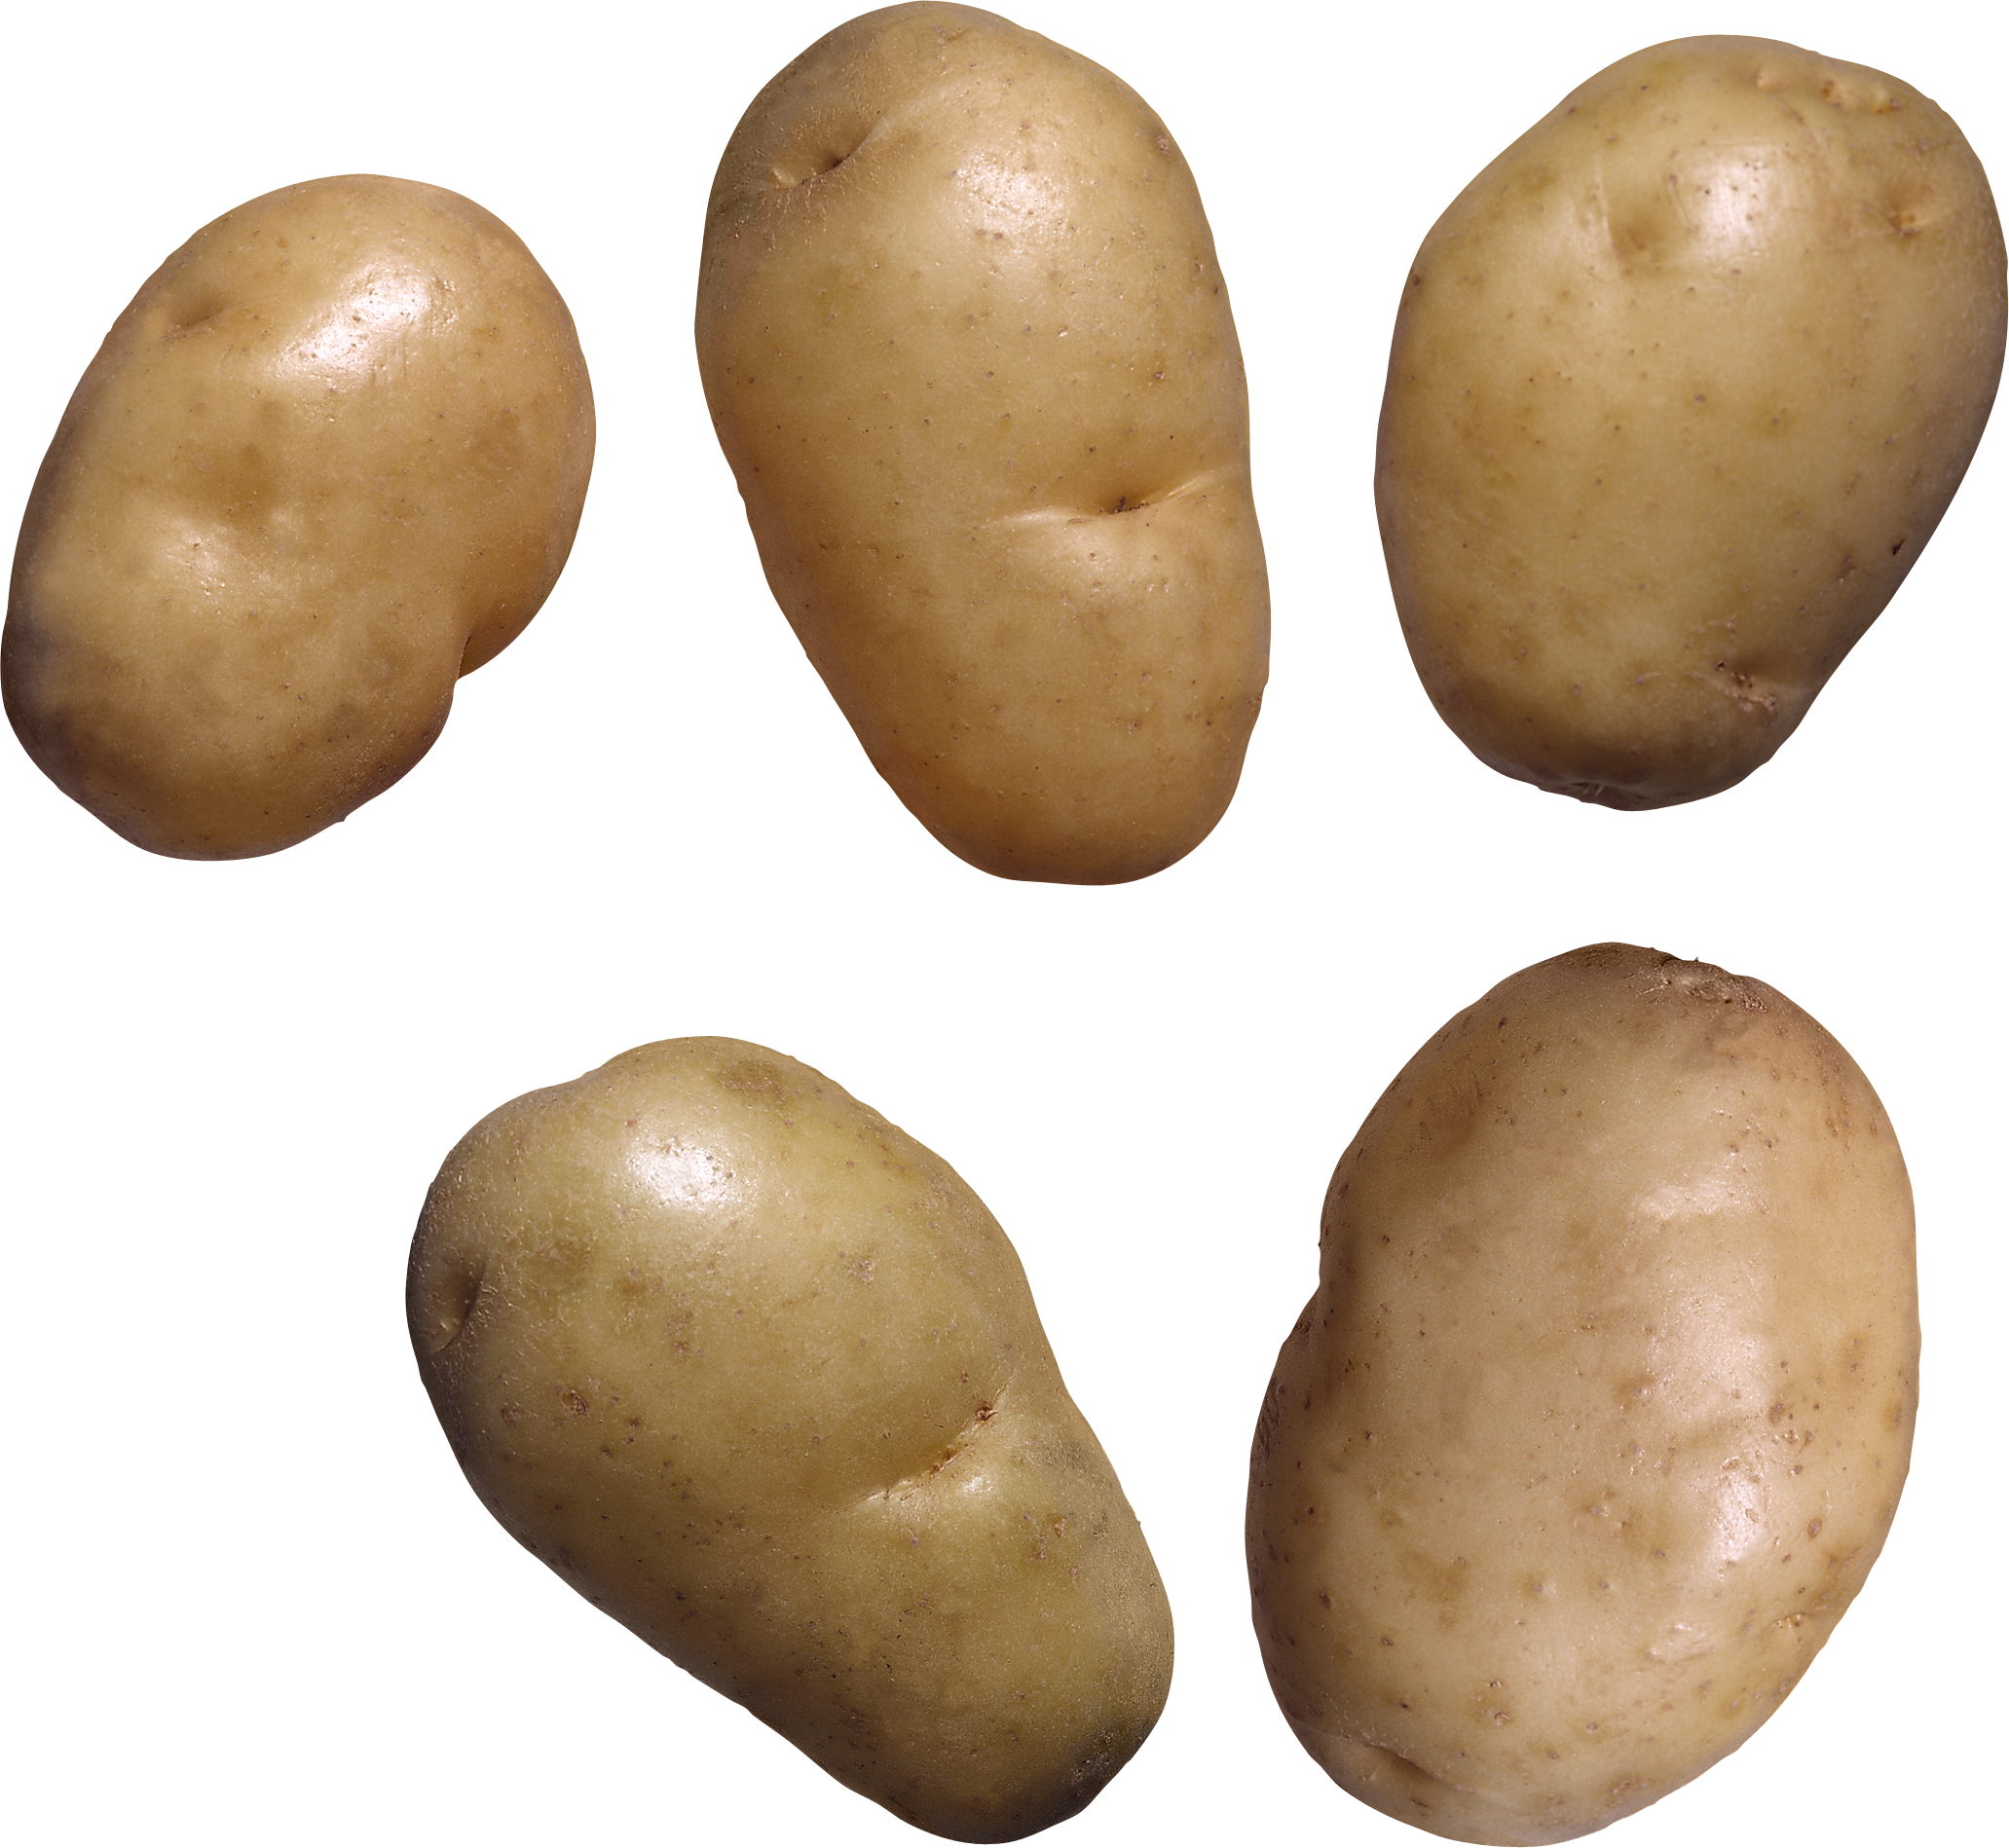 Potato clipart high resolution. Fifteen isolated stock photo